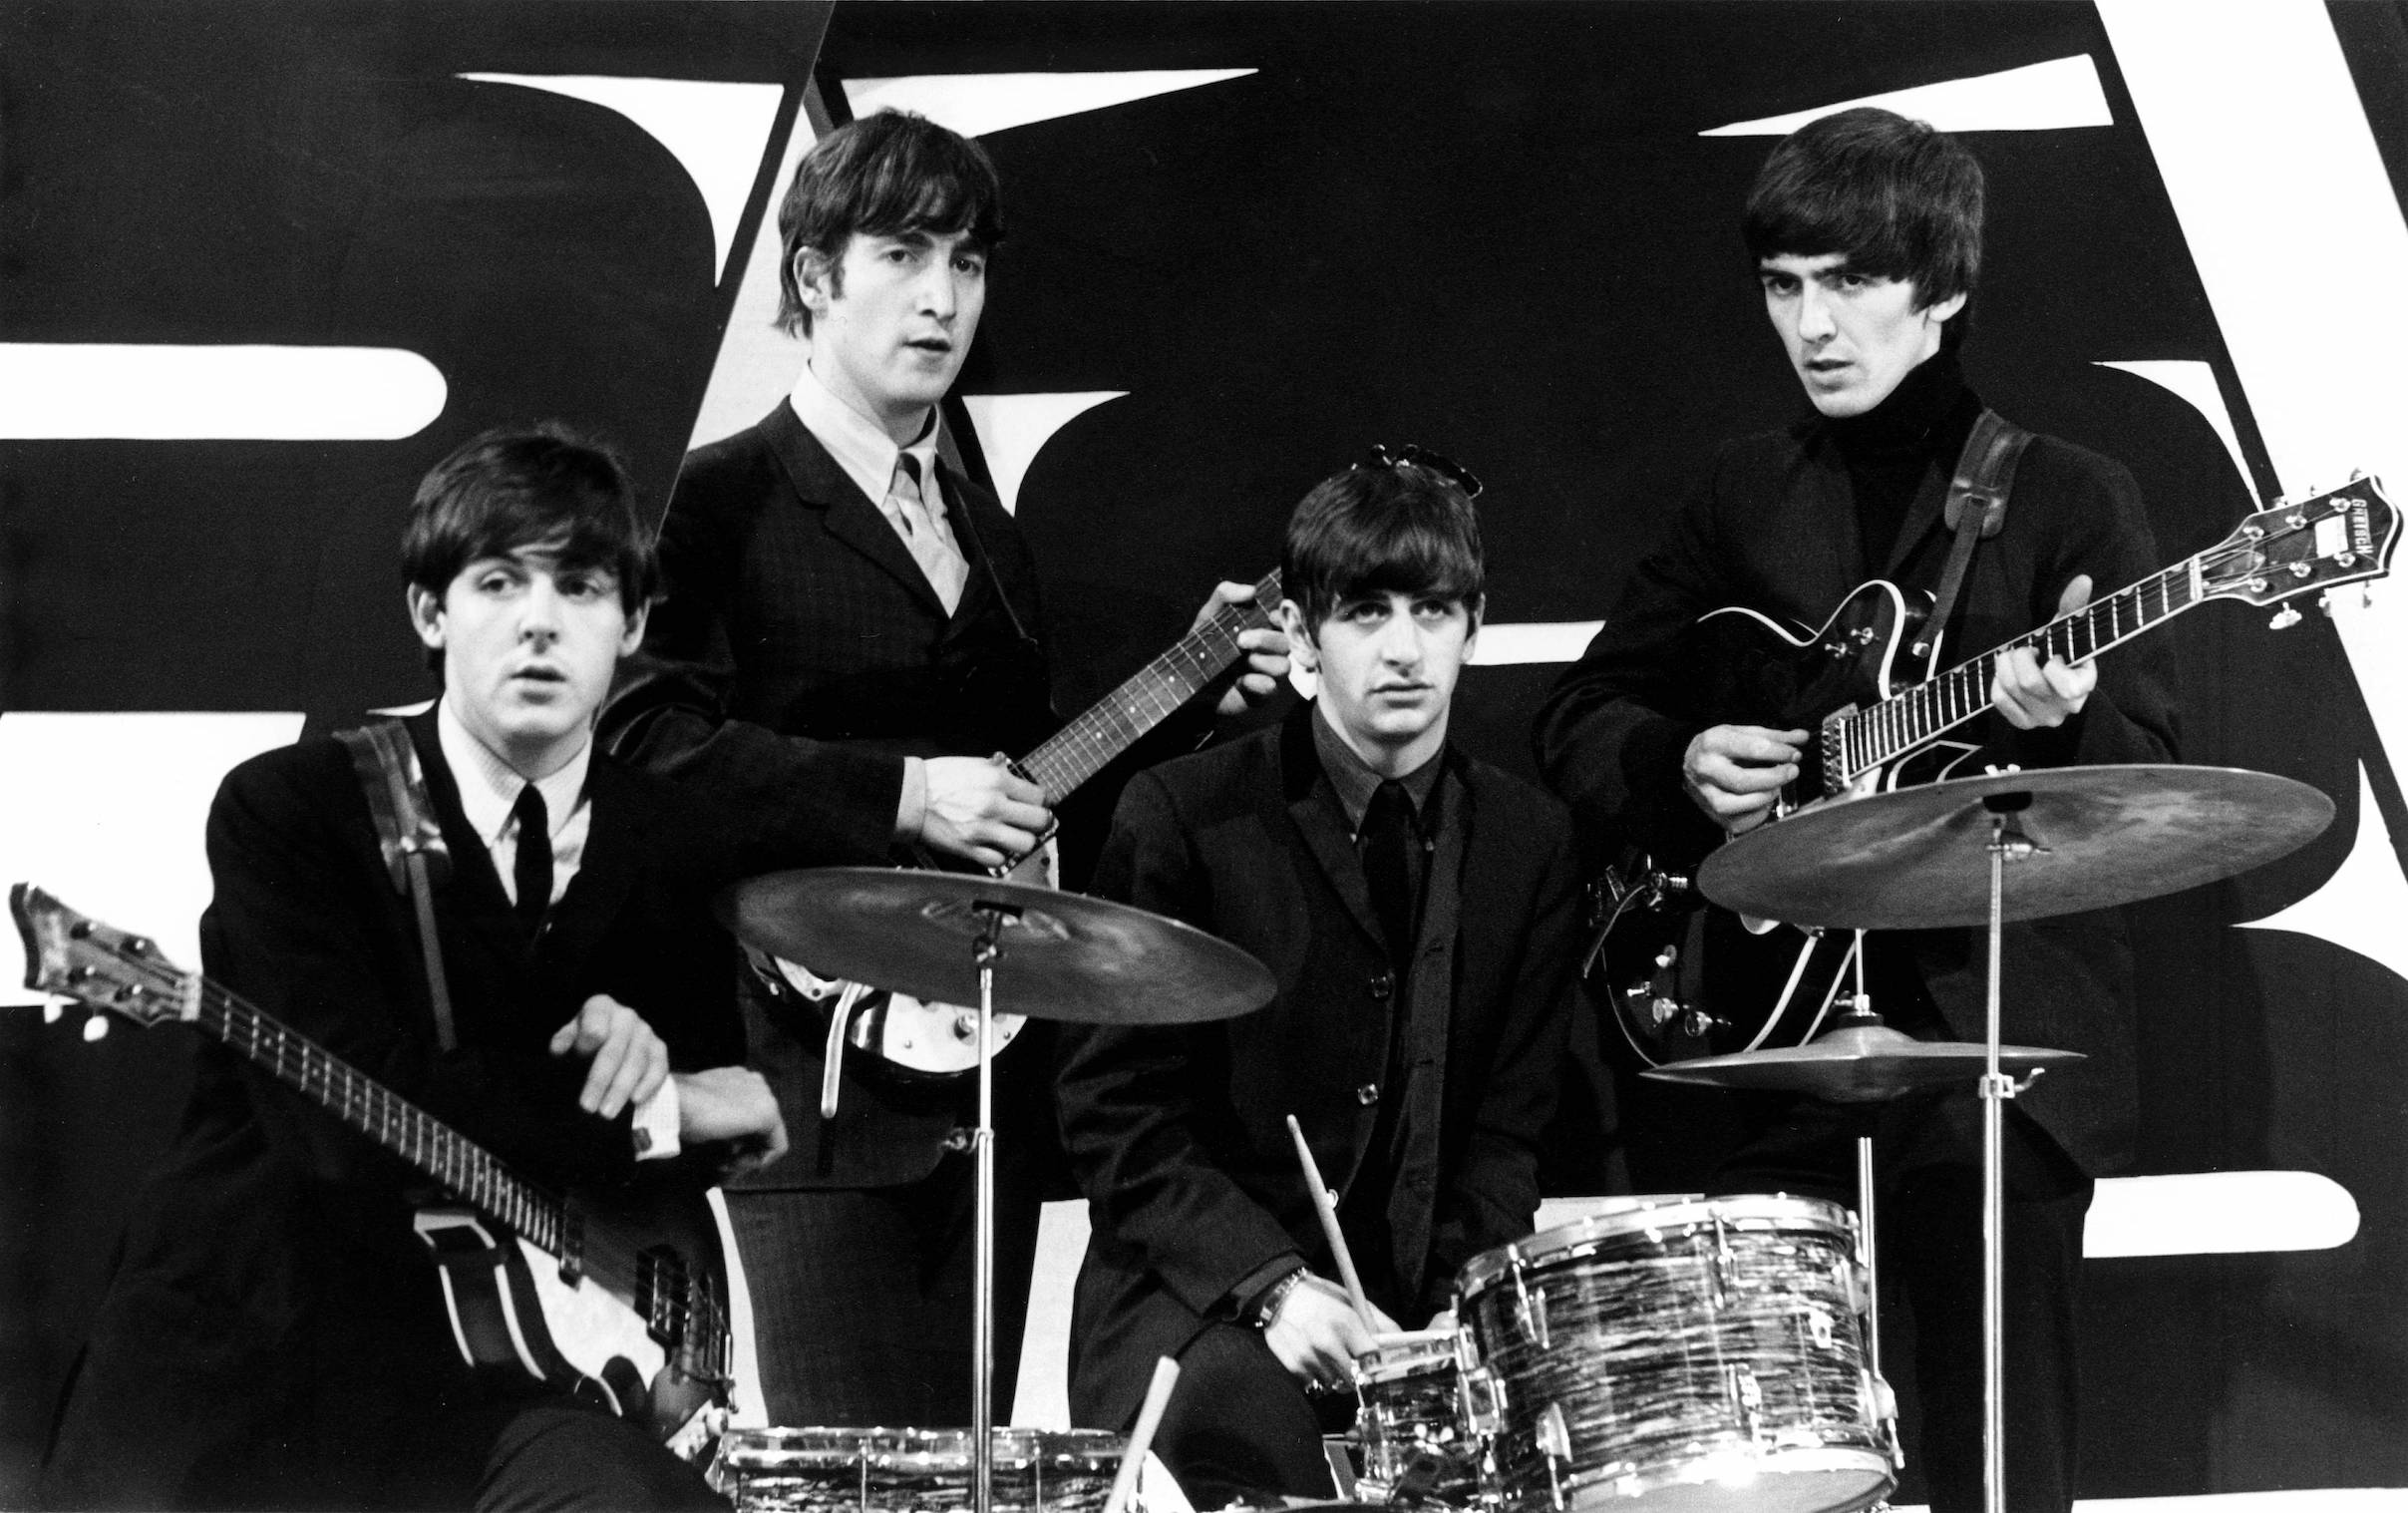 The Beatles at Alpha Television Studios